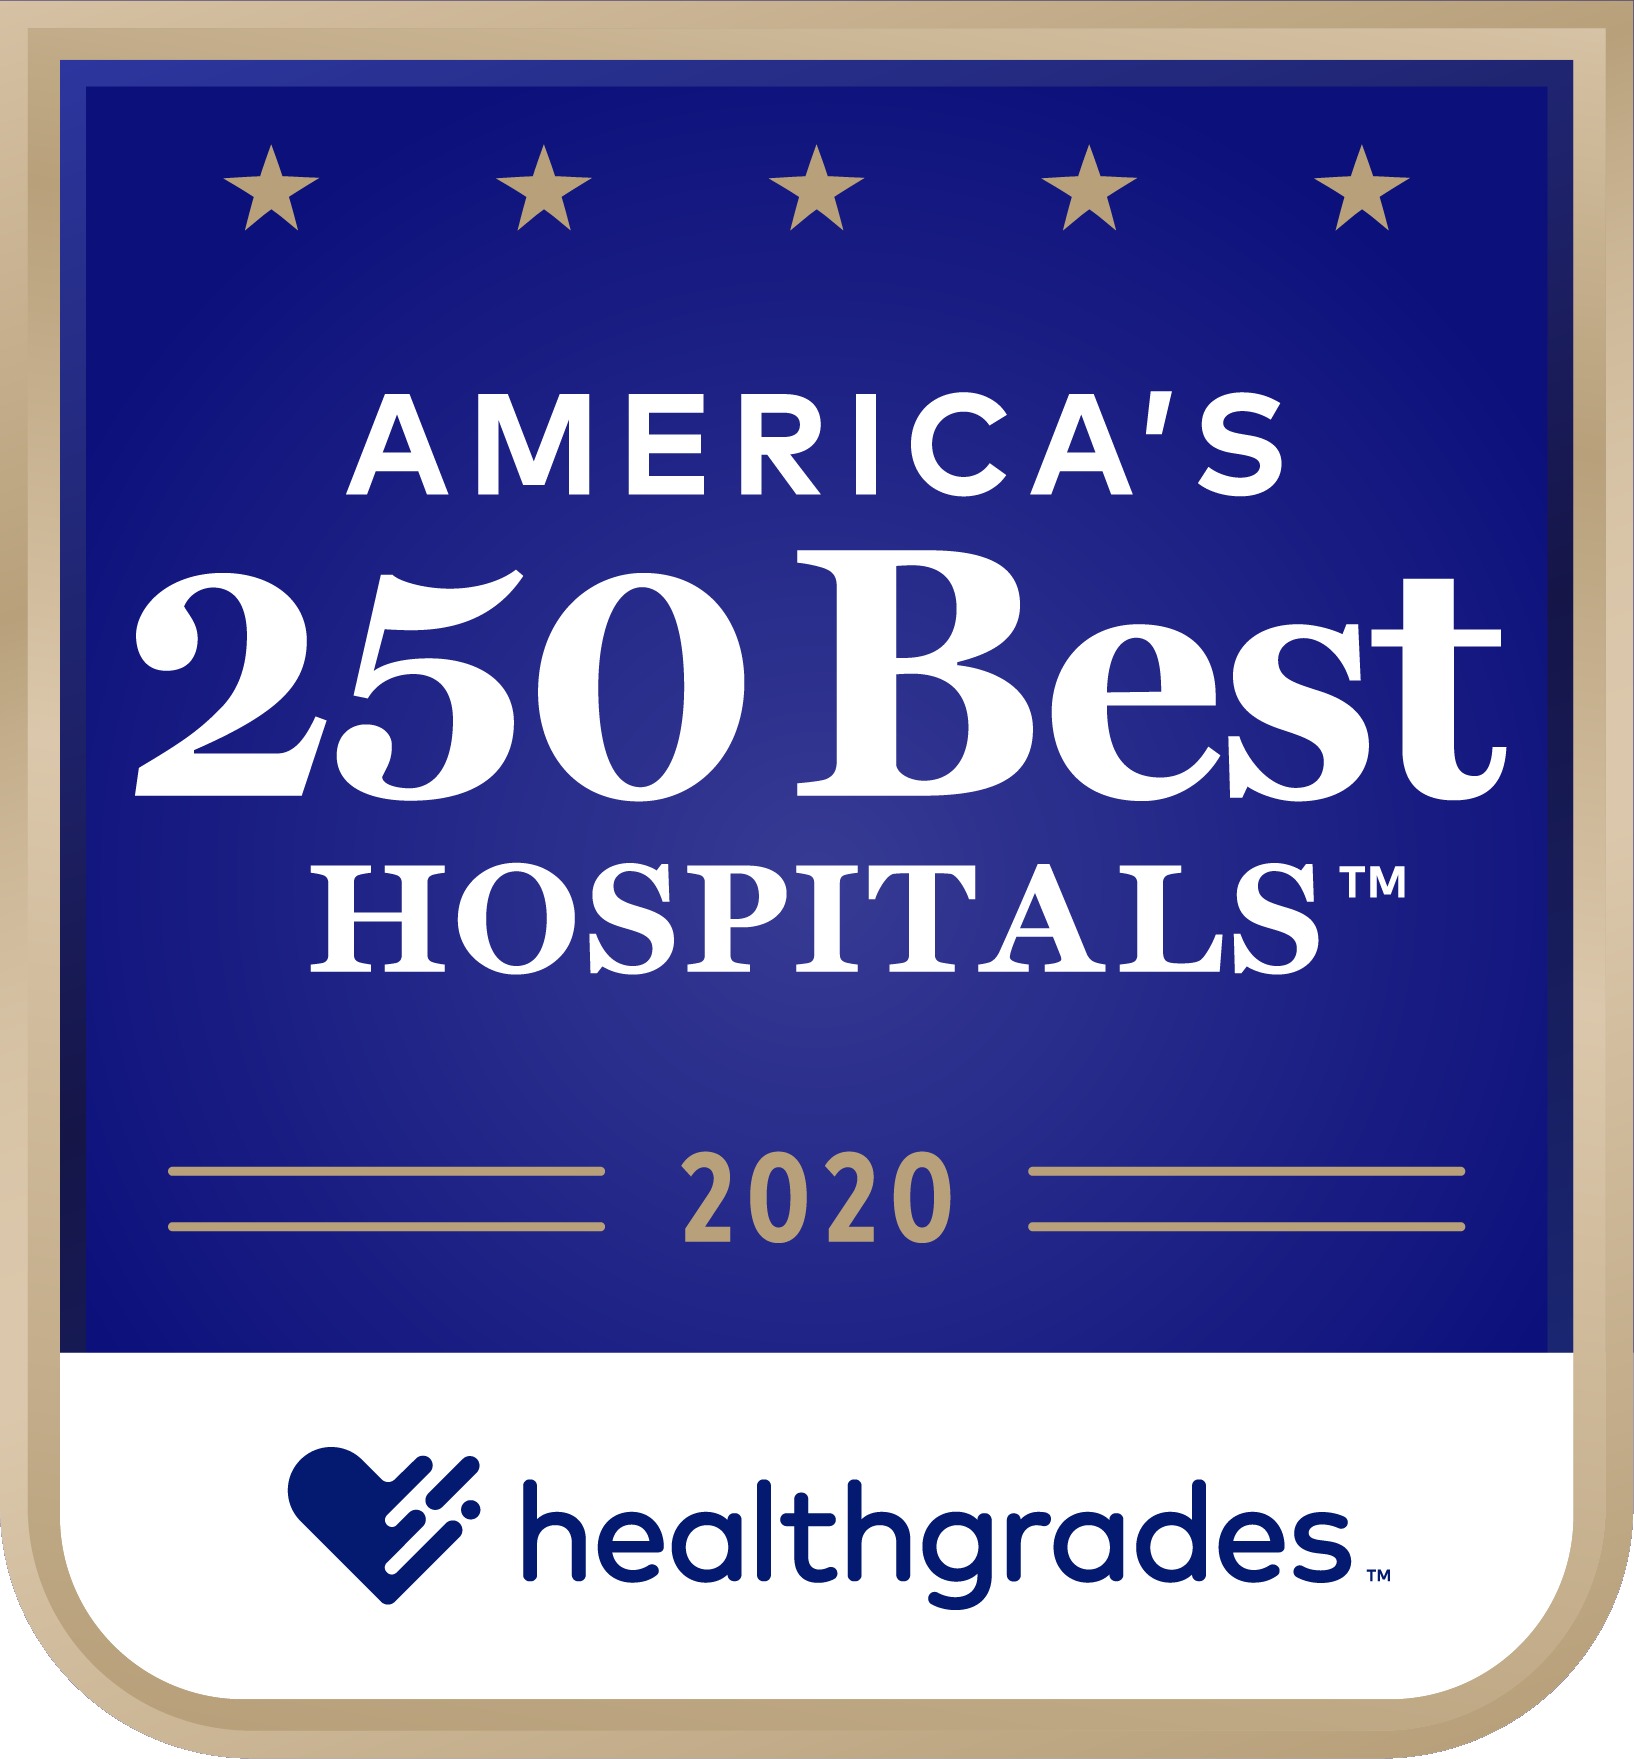 HG_Americas_250_Best_Award_Image_2020.jpg